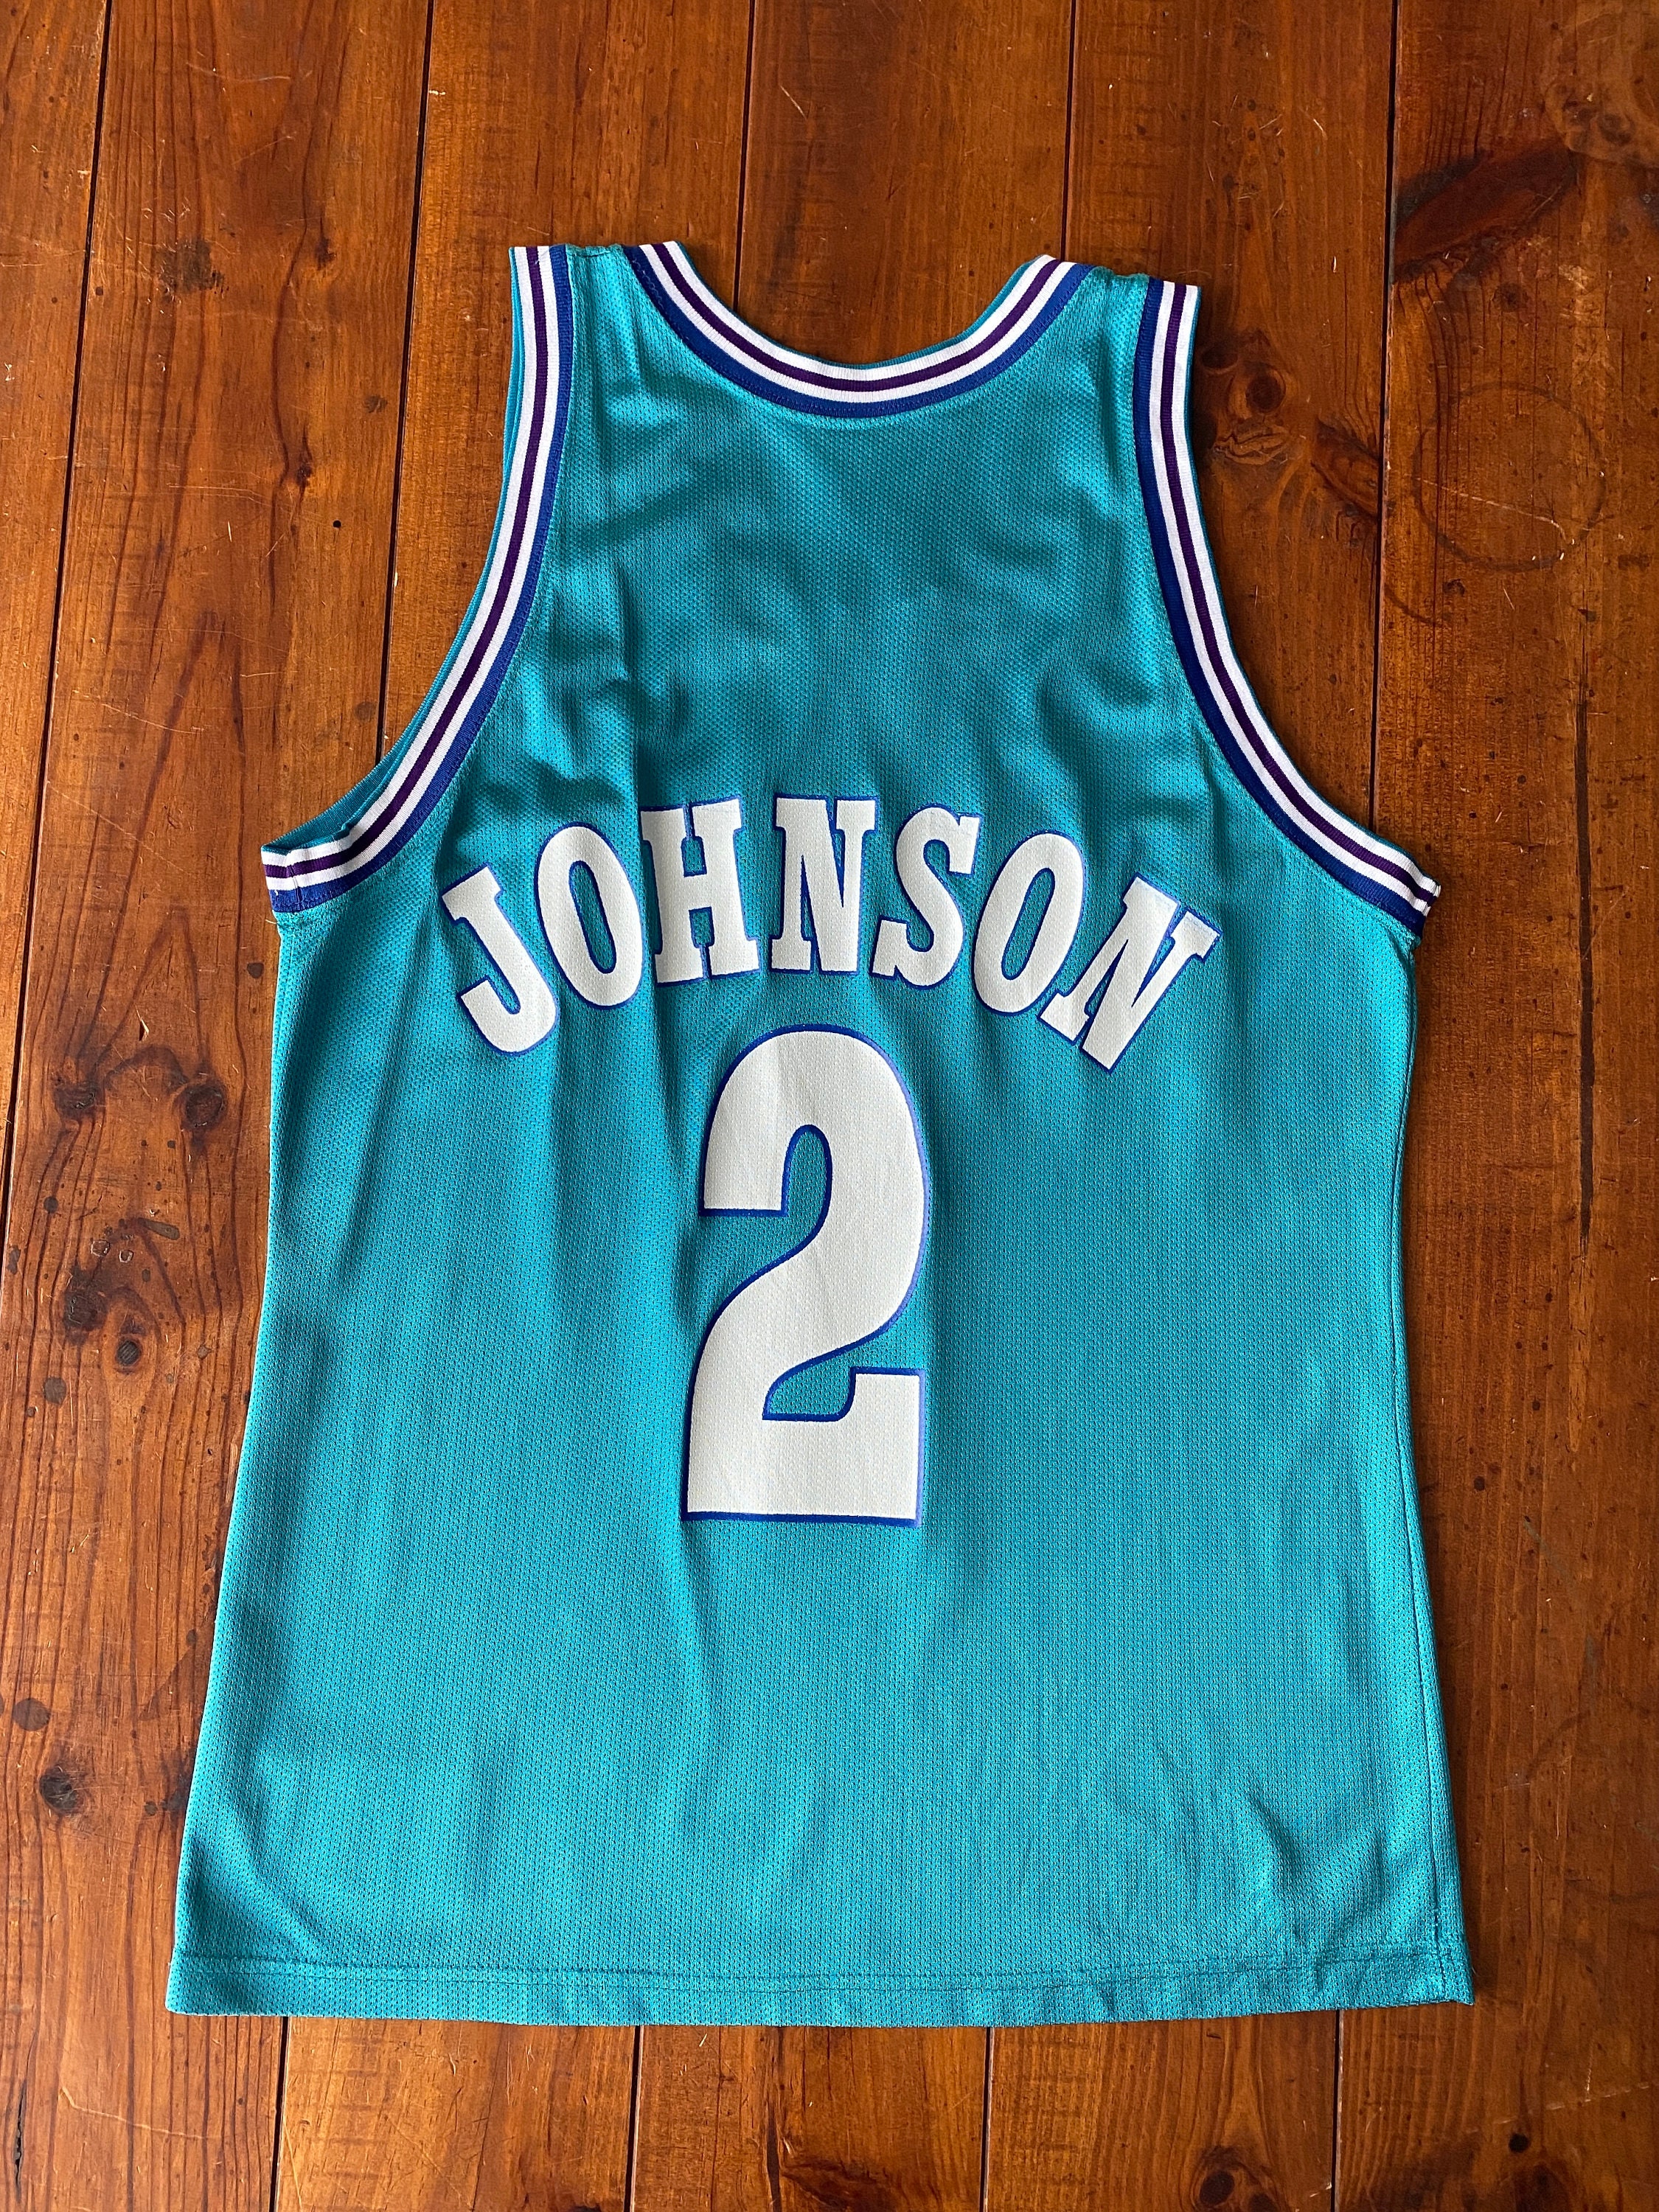 Top Jersey: NBA Charlotte Hornets Jersey #2 Johnson! Gr.48 (XL)! From  Champion